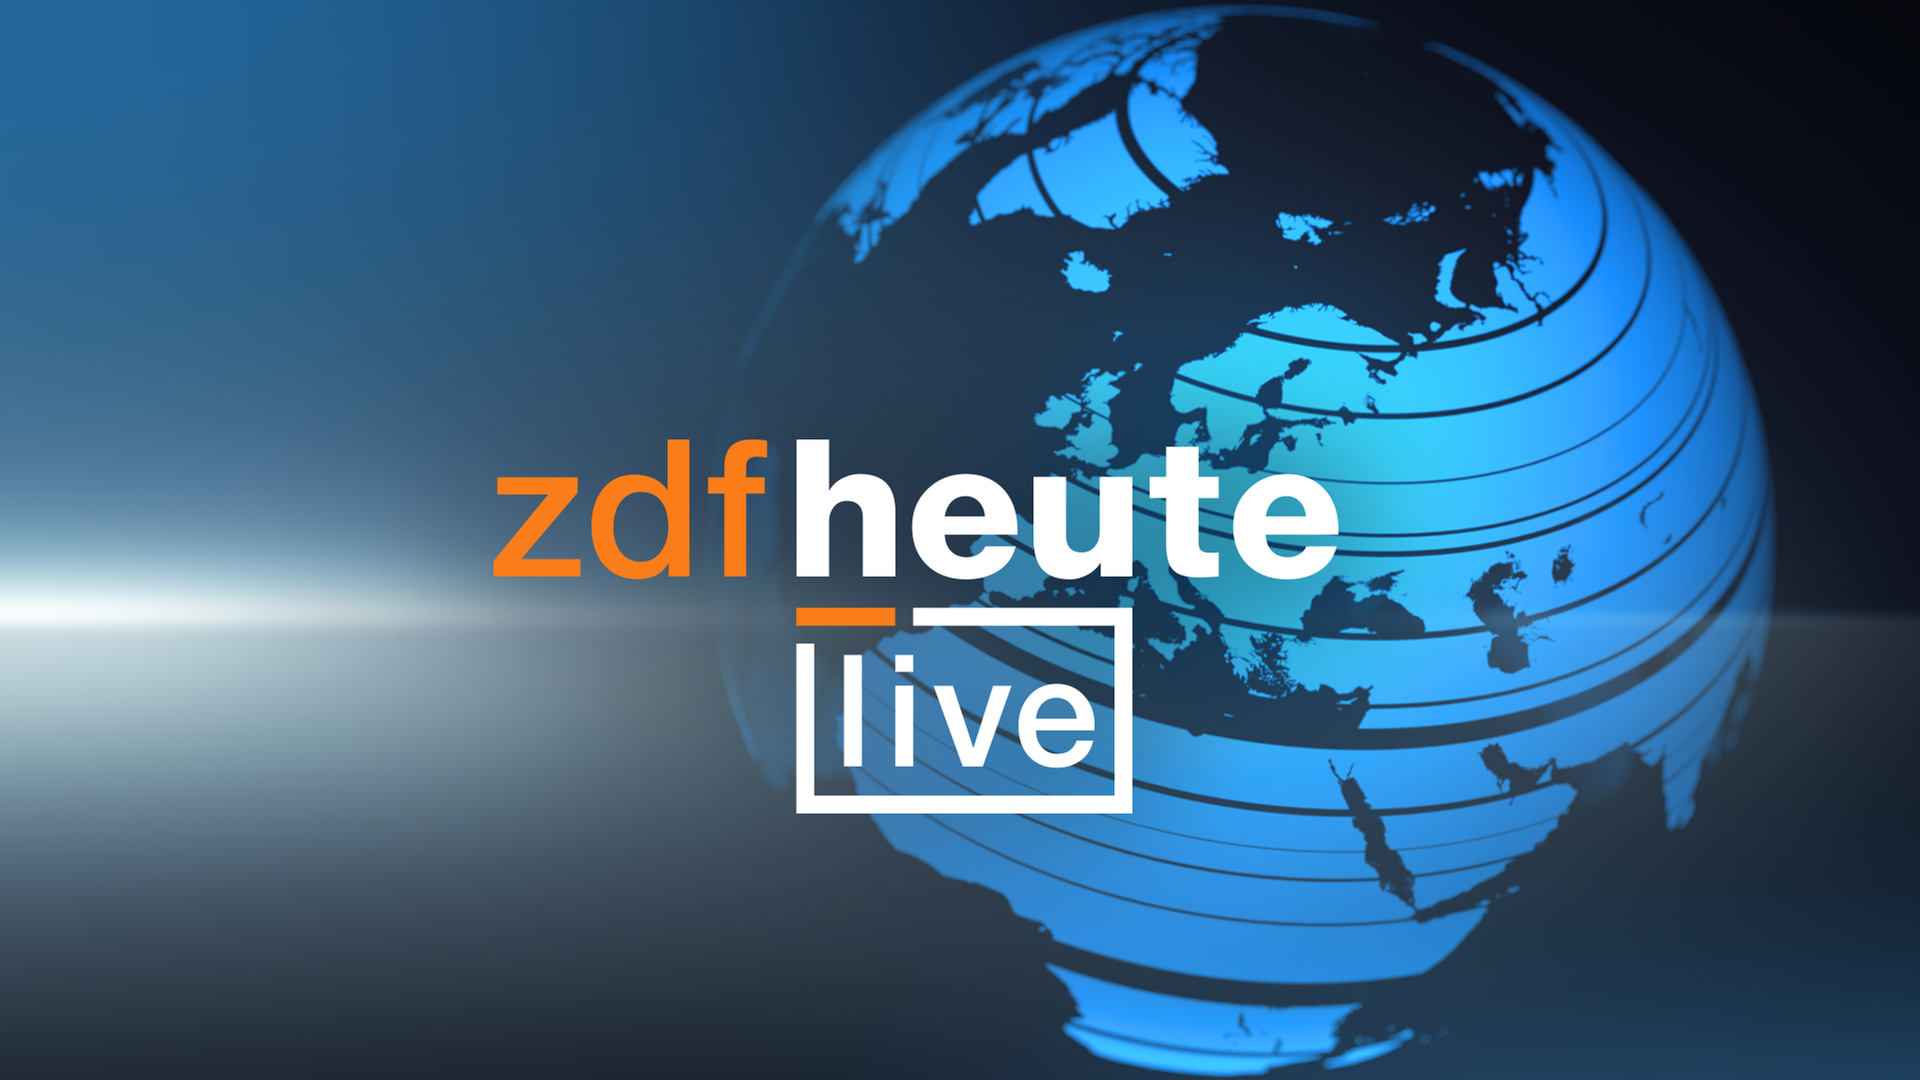 ZDFheute live